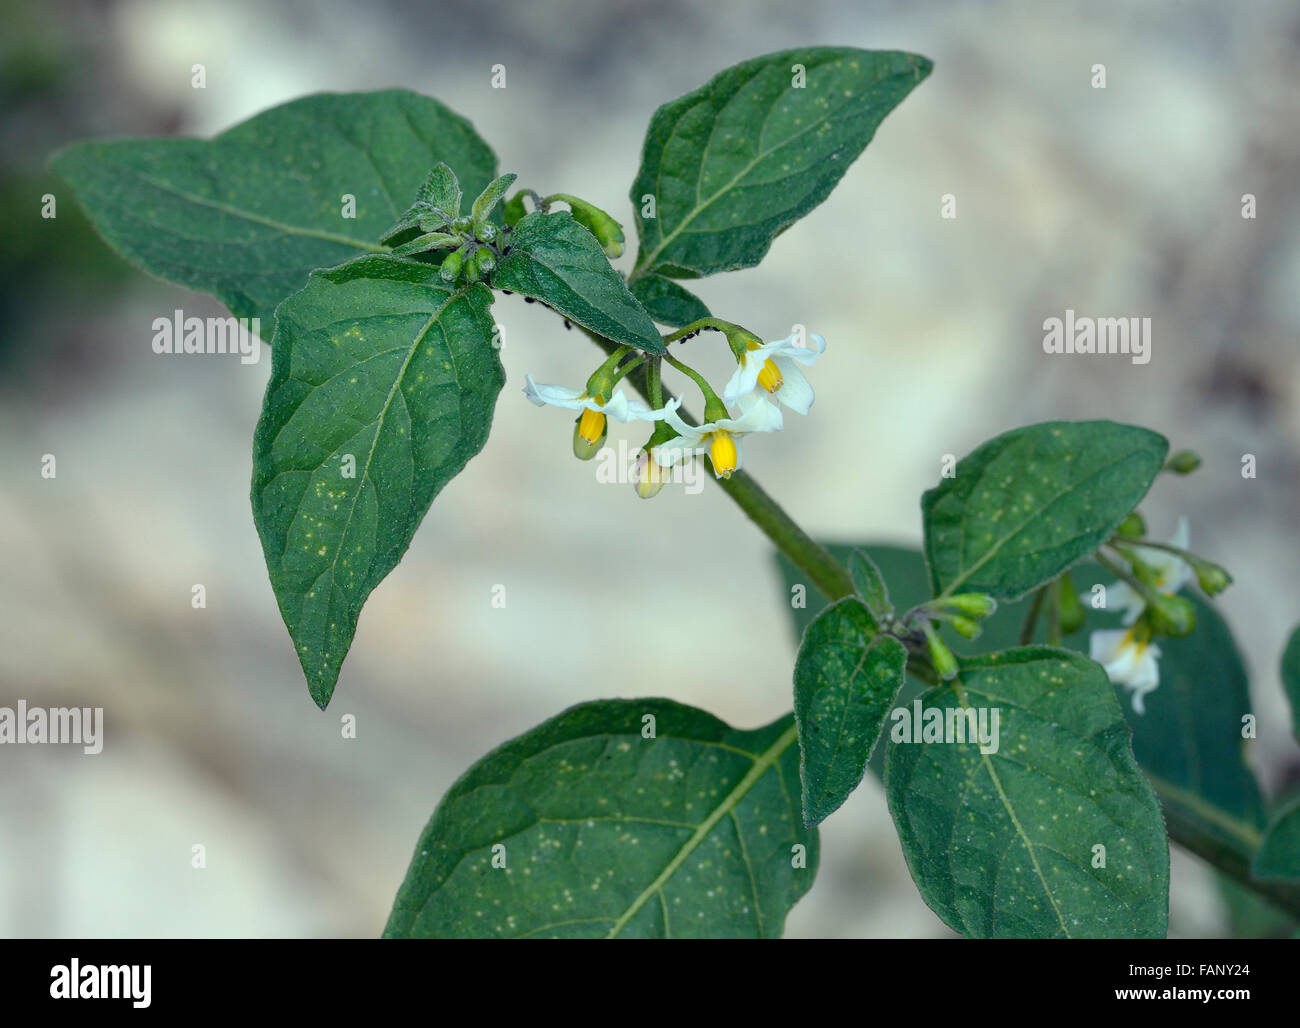 Black Nightshade - Solanum nigrum Poisonous Plant with Flowers Stock Photo